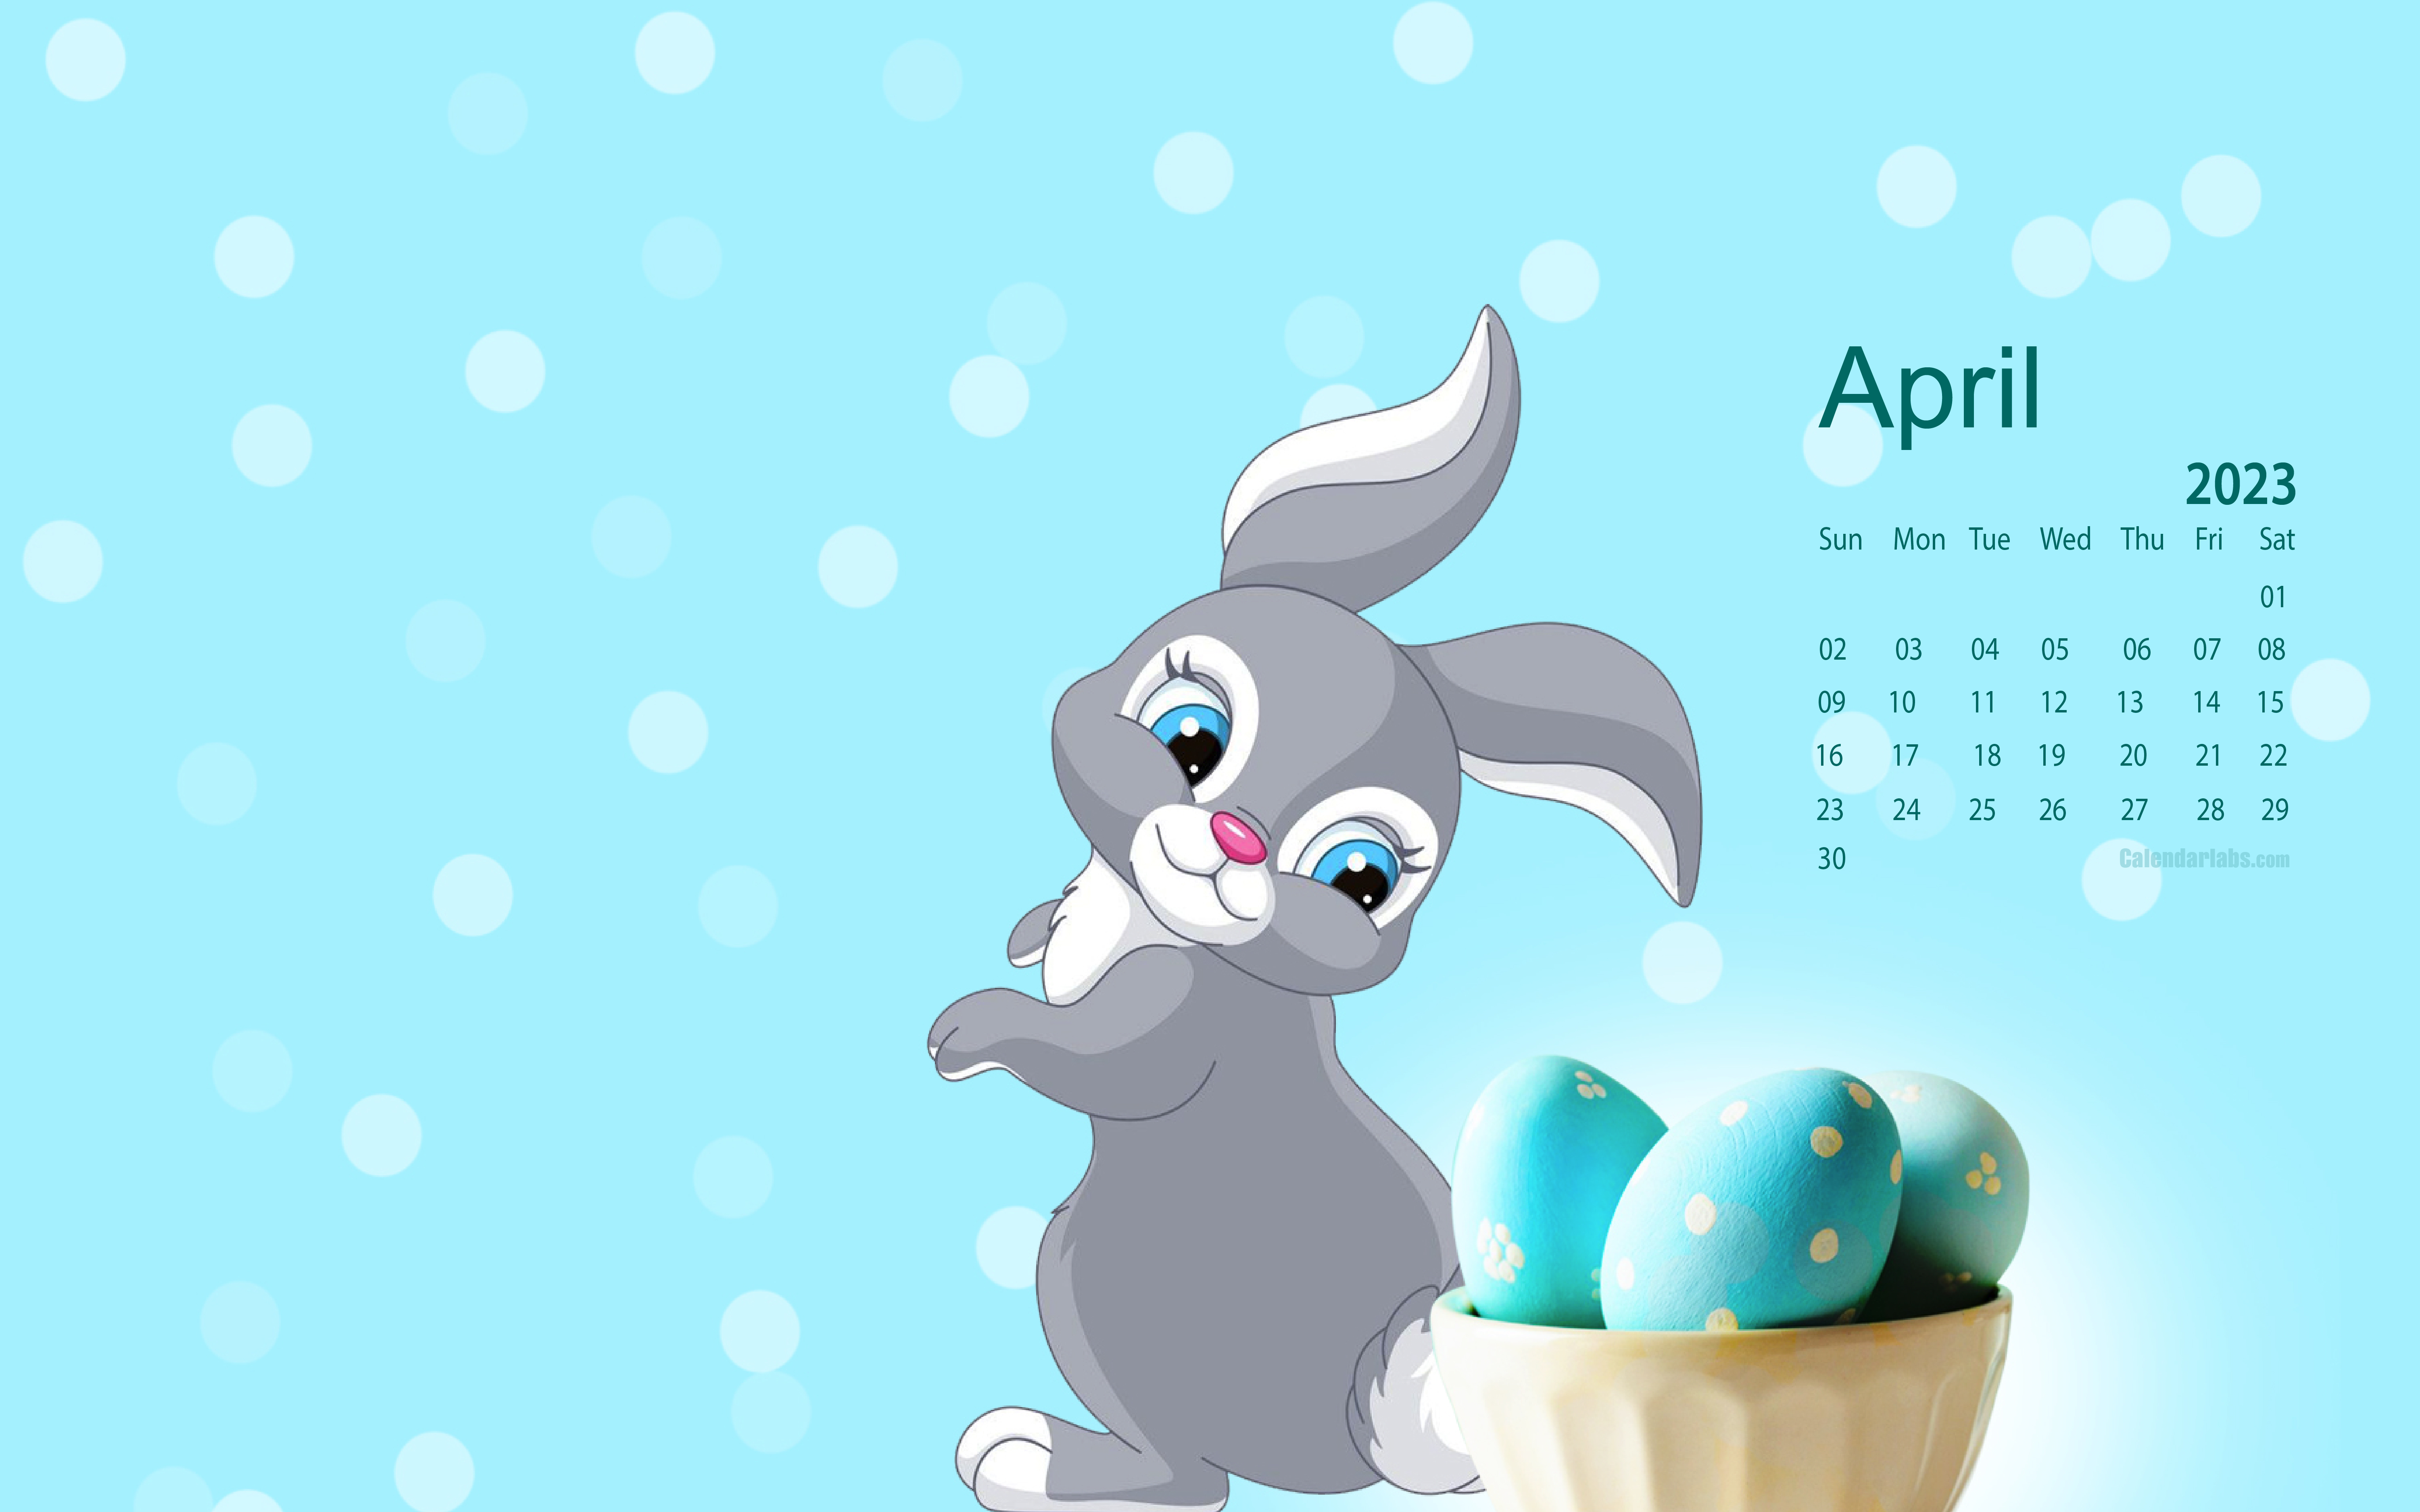 April 2023 Desktop Wallpaper Calendar - CalendarLabs